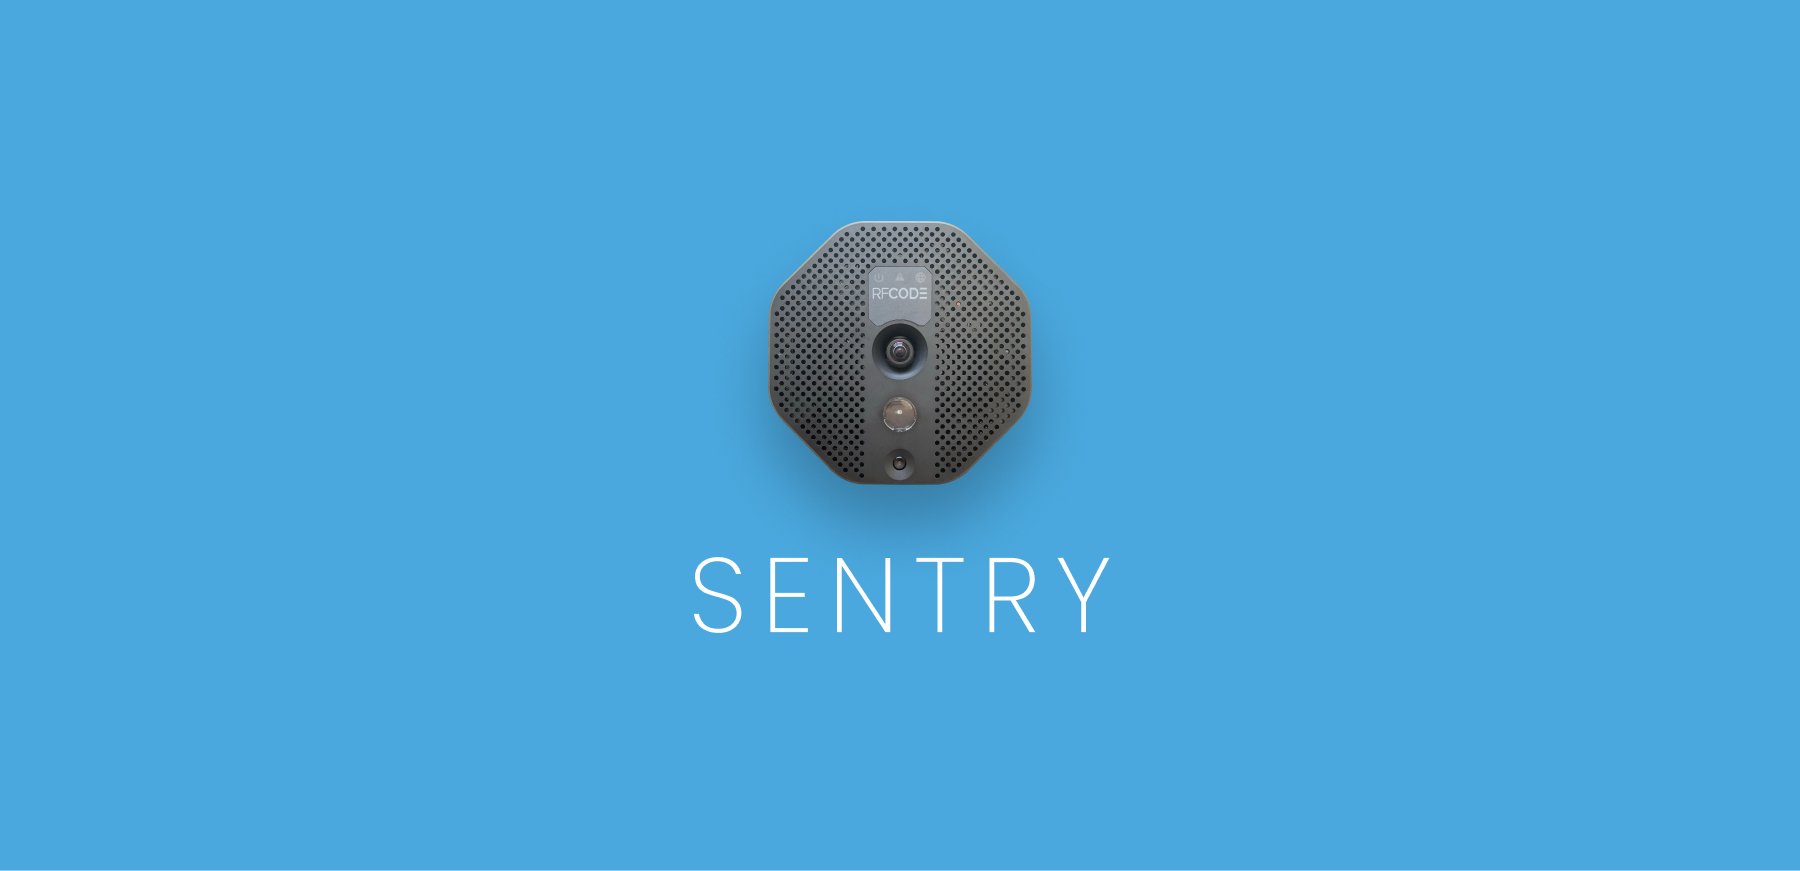 Sentry by RF Code